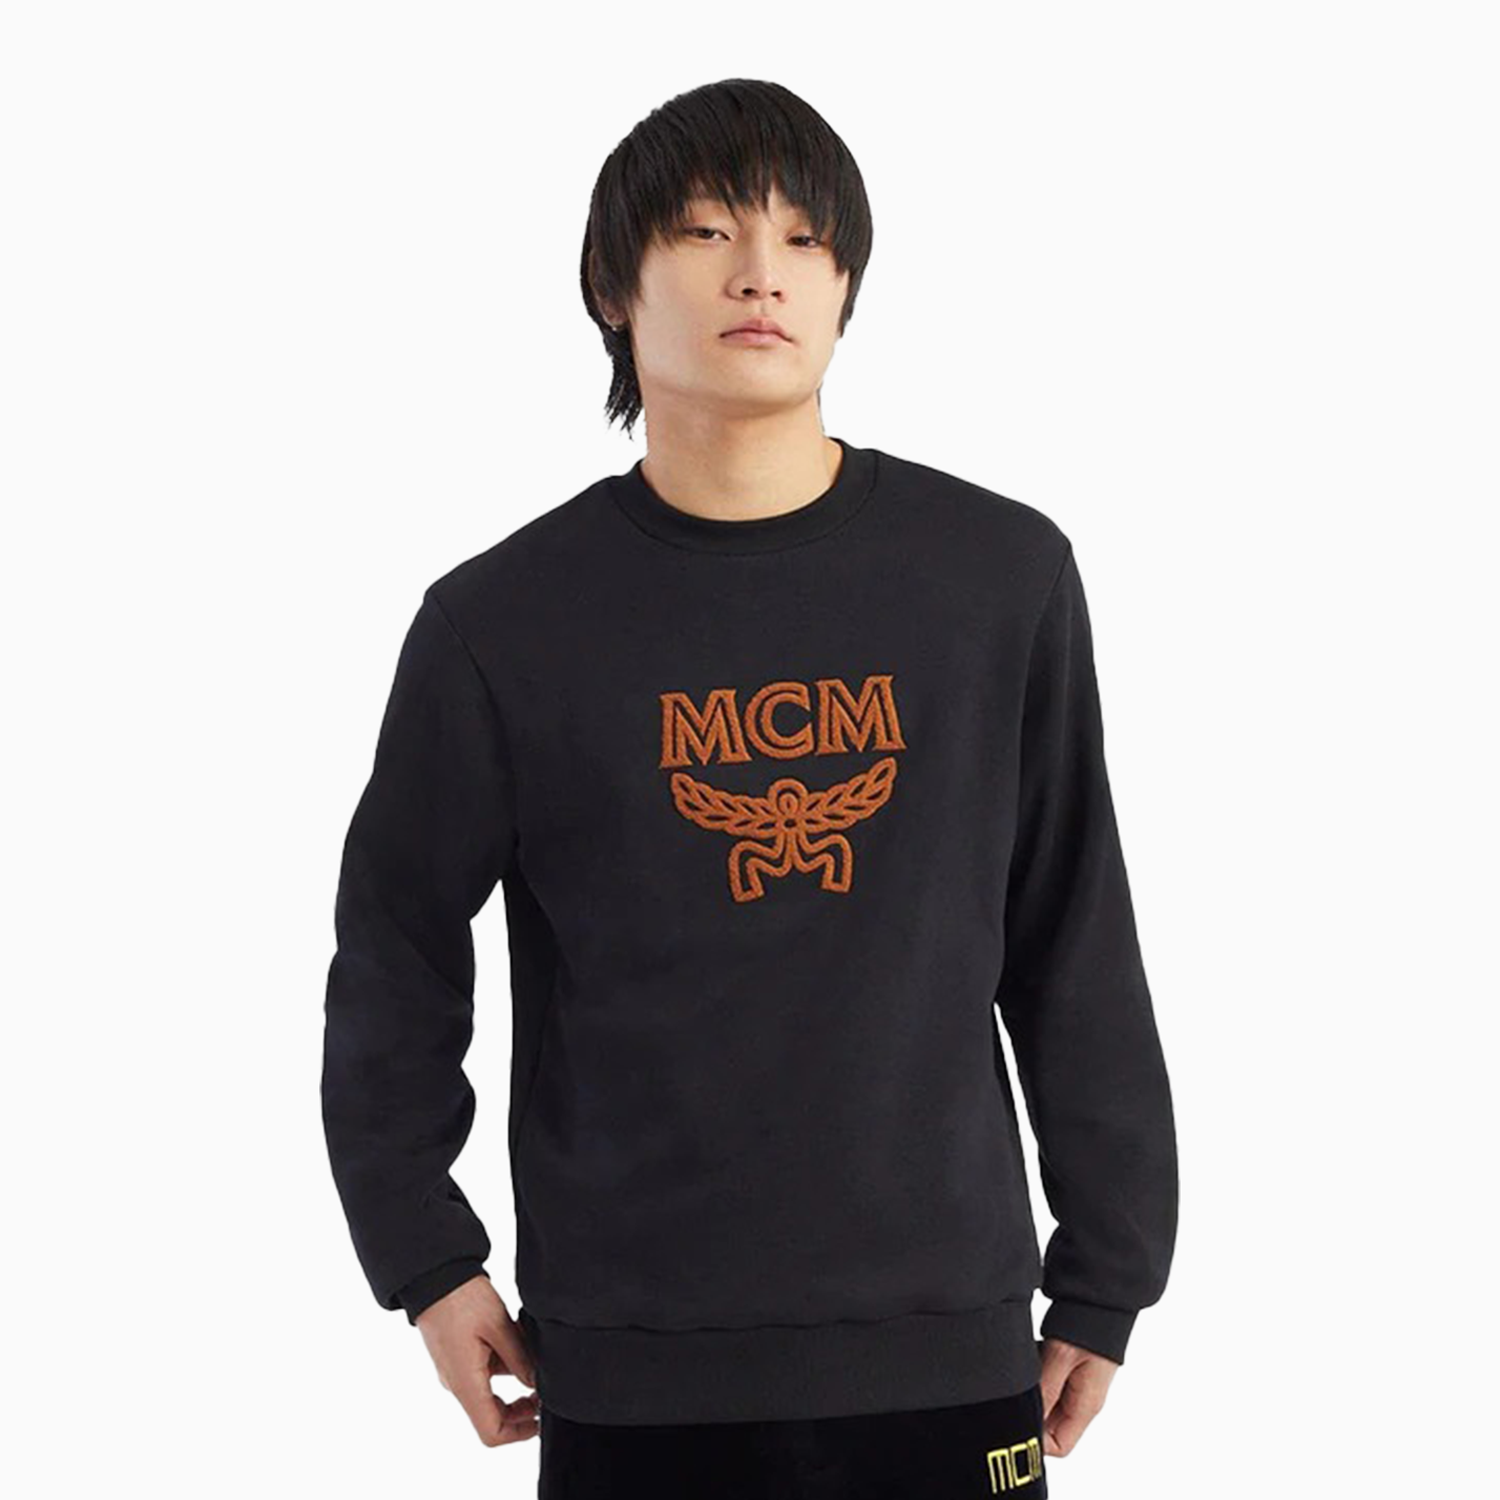 mcm-men-s-classic-logo-sweatshirt-mhabsmm06b2